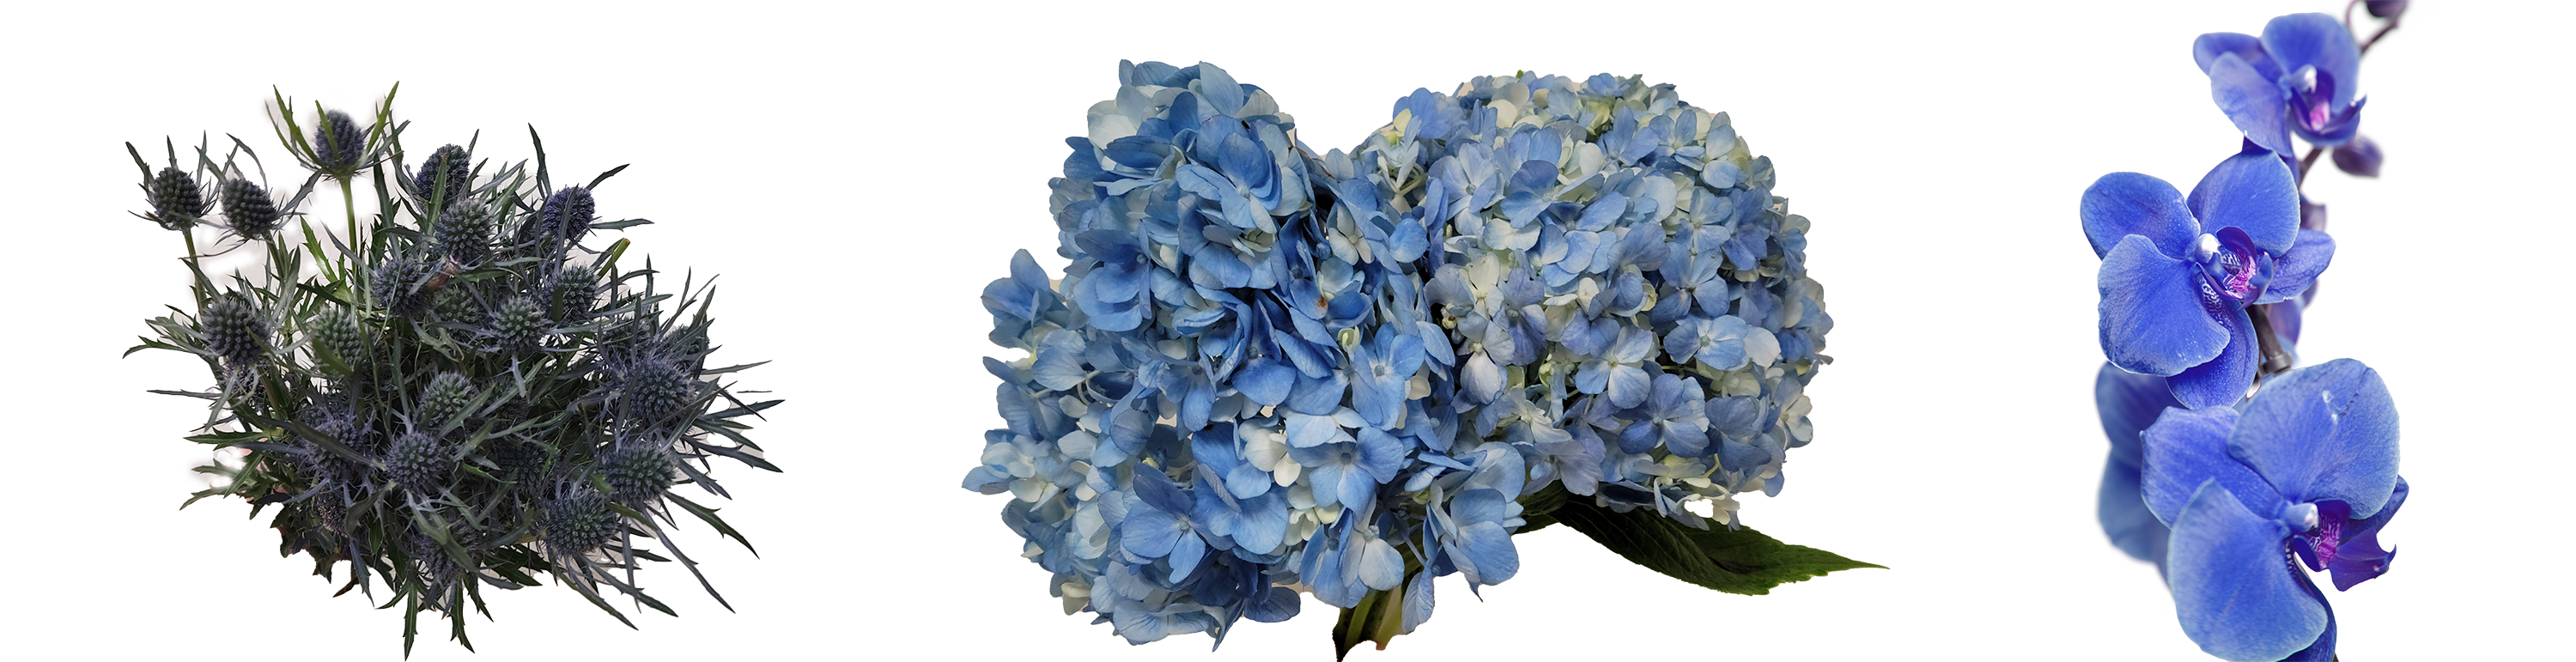 Blue Hydreangeas - Eryngium - Orchids-1